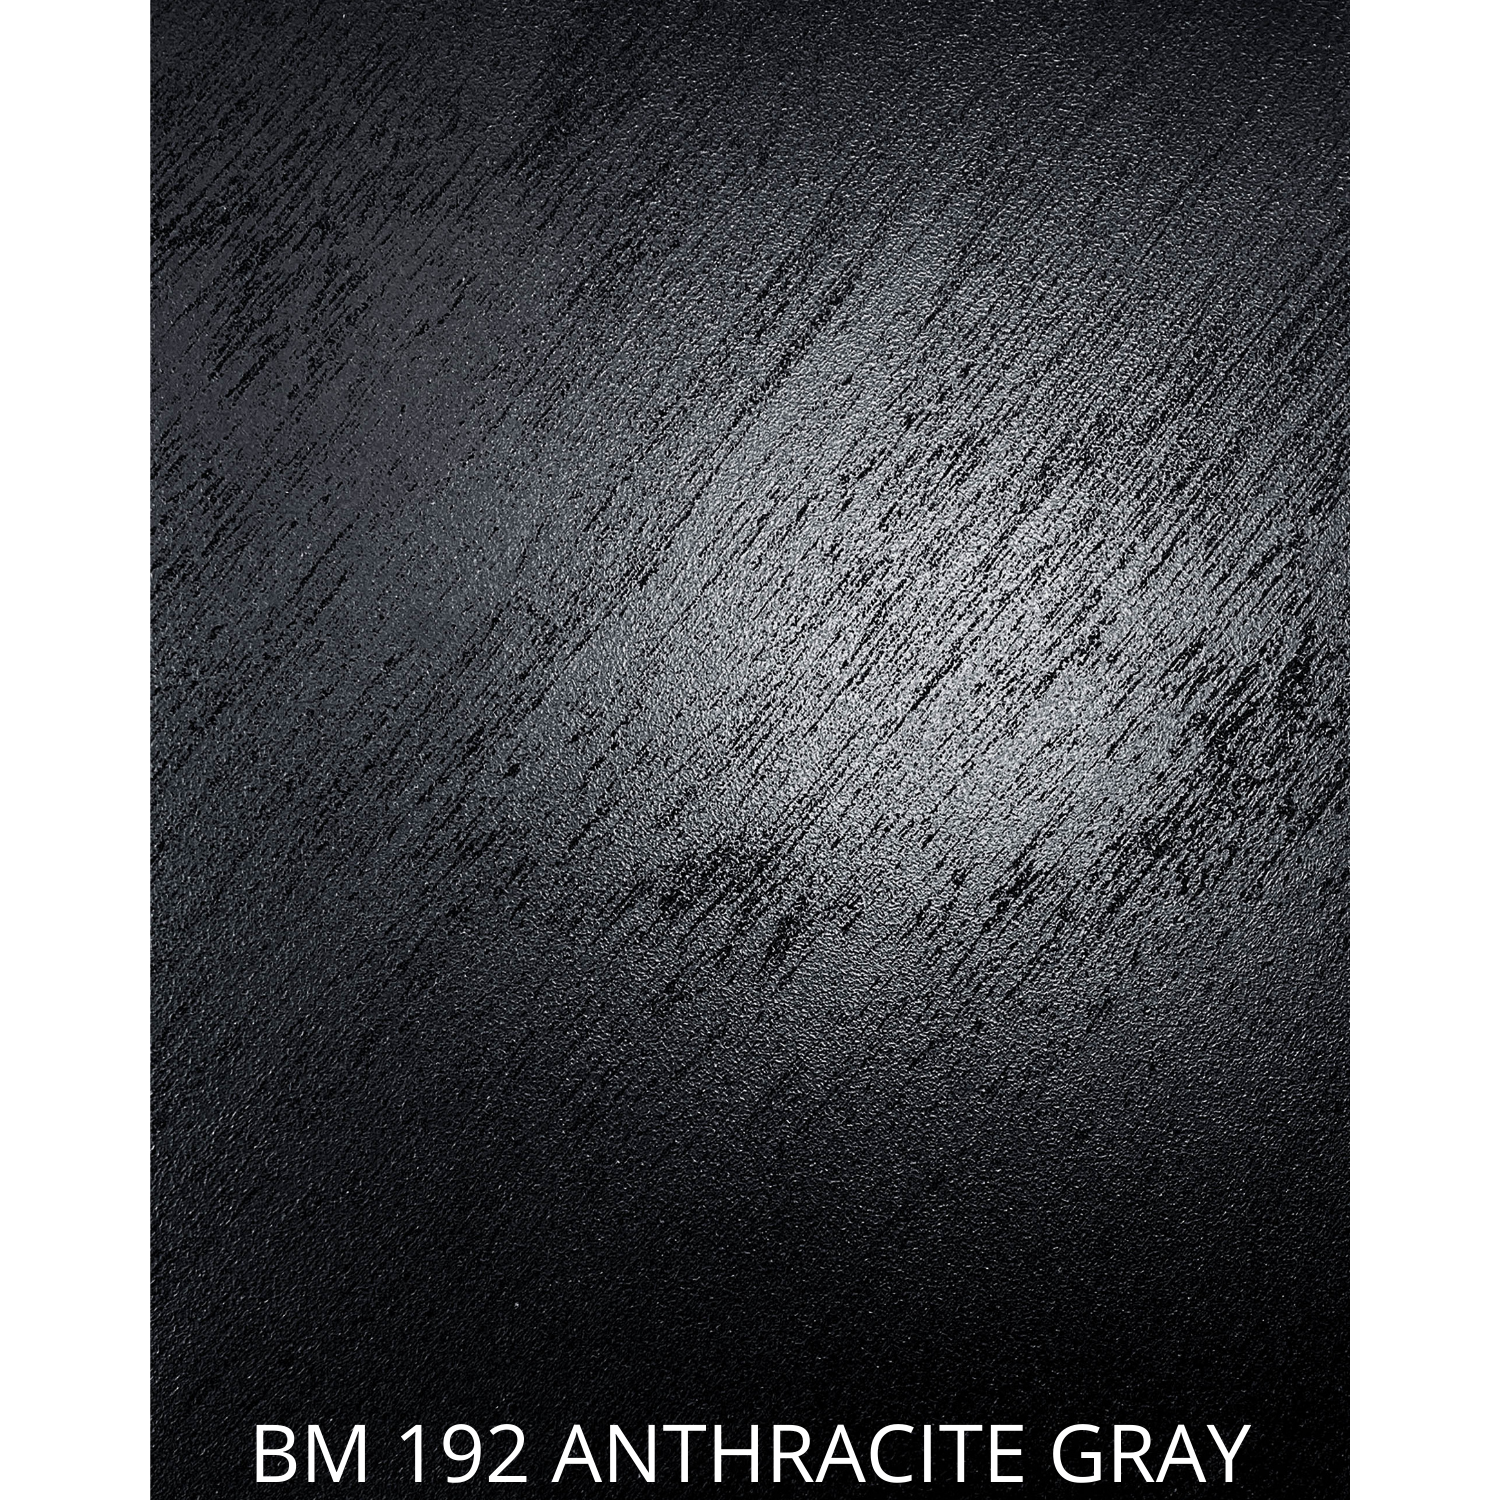 BM 192 ANTHRACITE GRAY